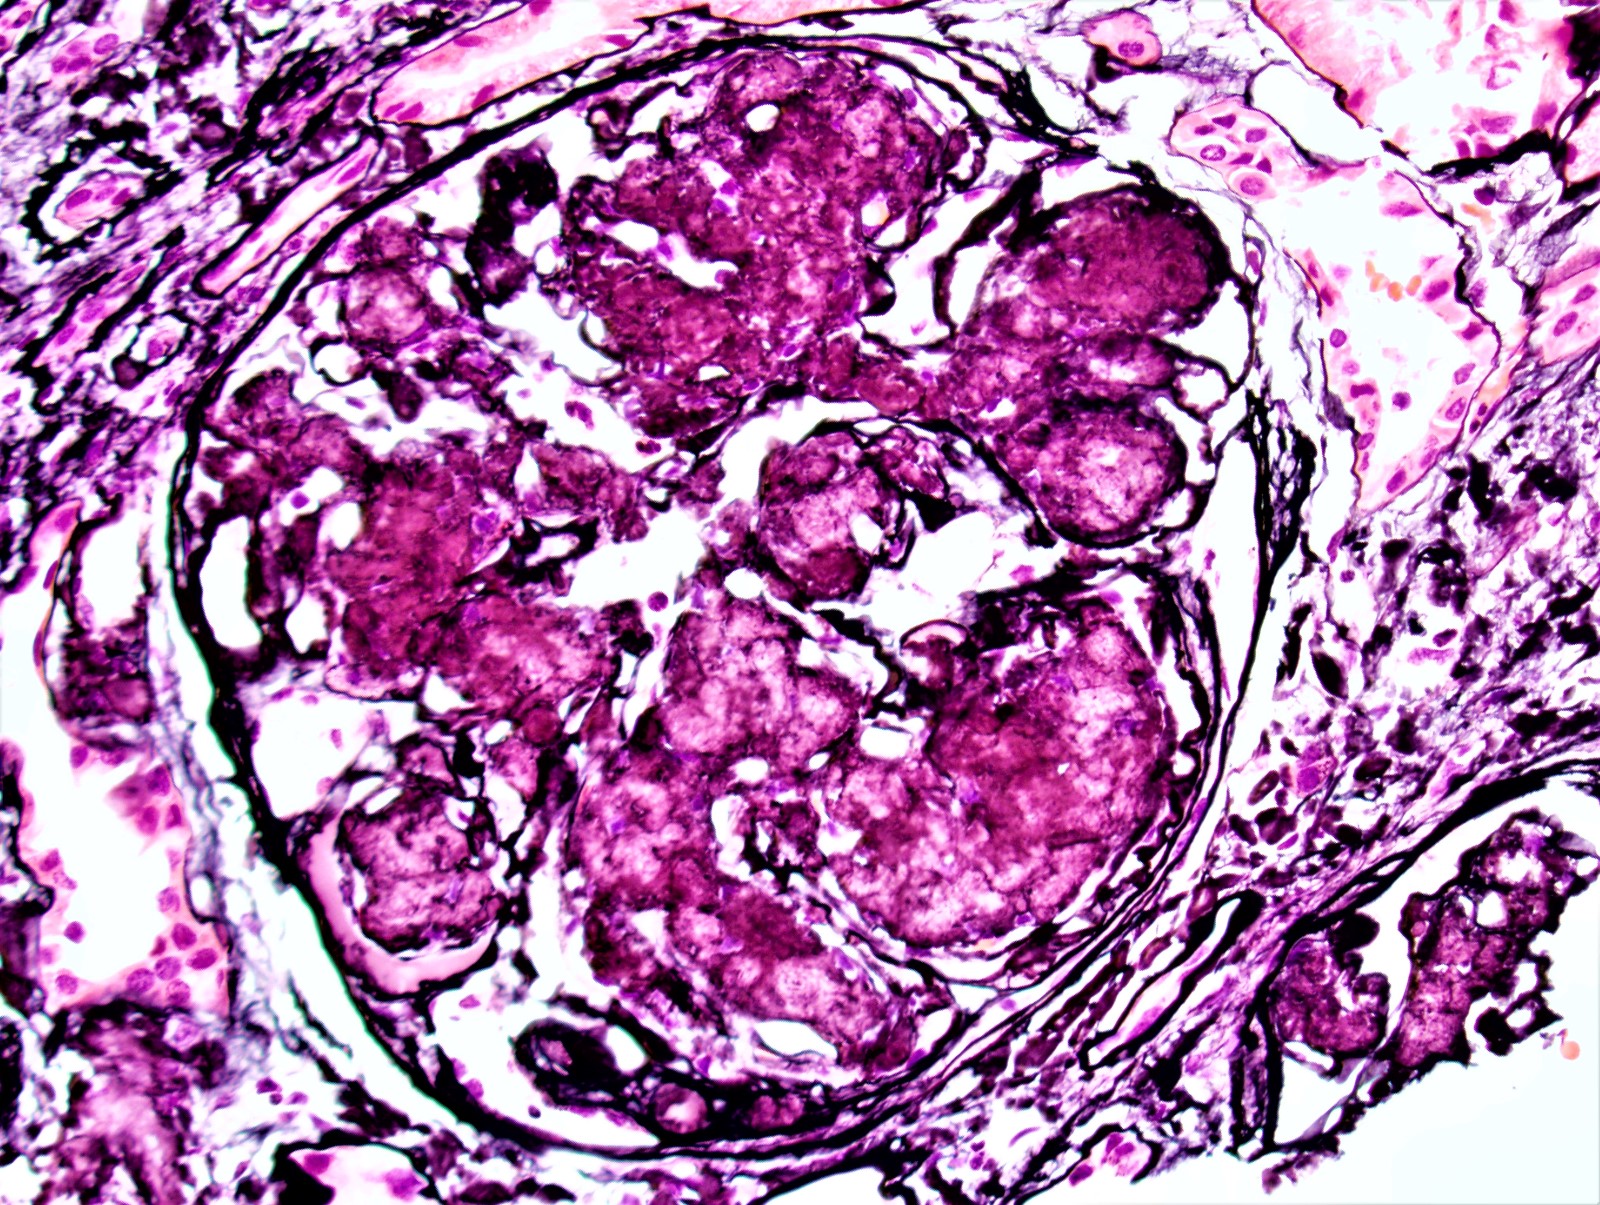 Nodular expansion of mesangium of glomerulus, AL amyloid